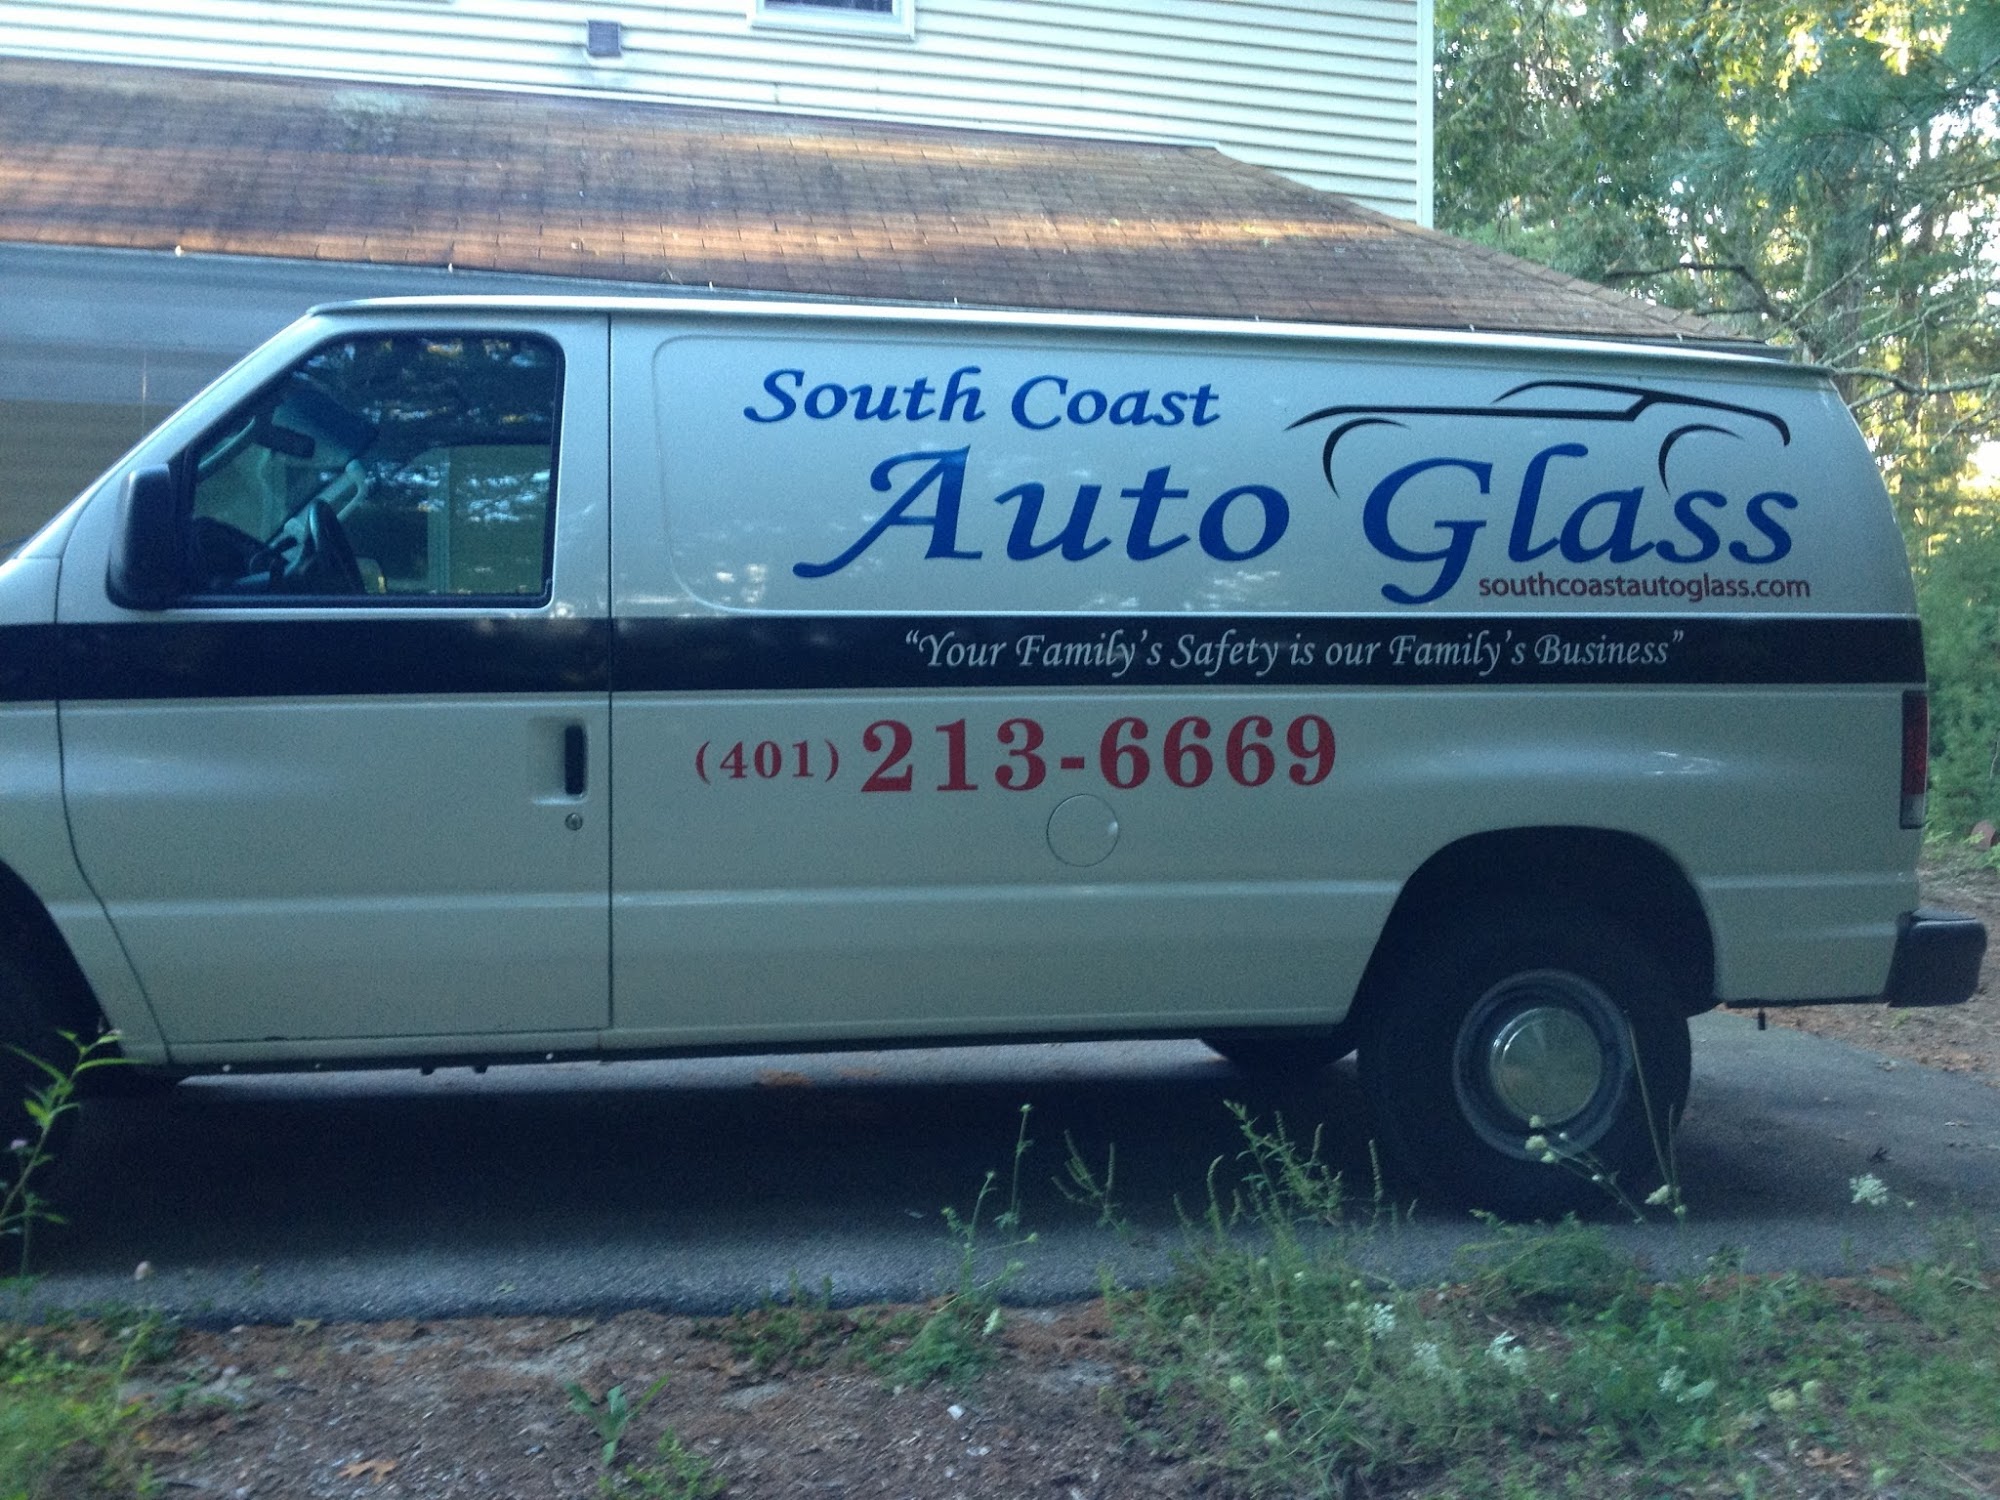 South Coast Auto Glass